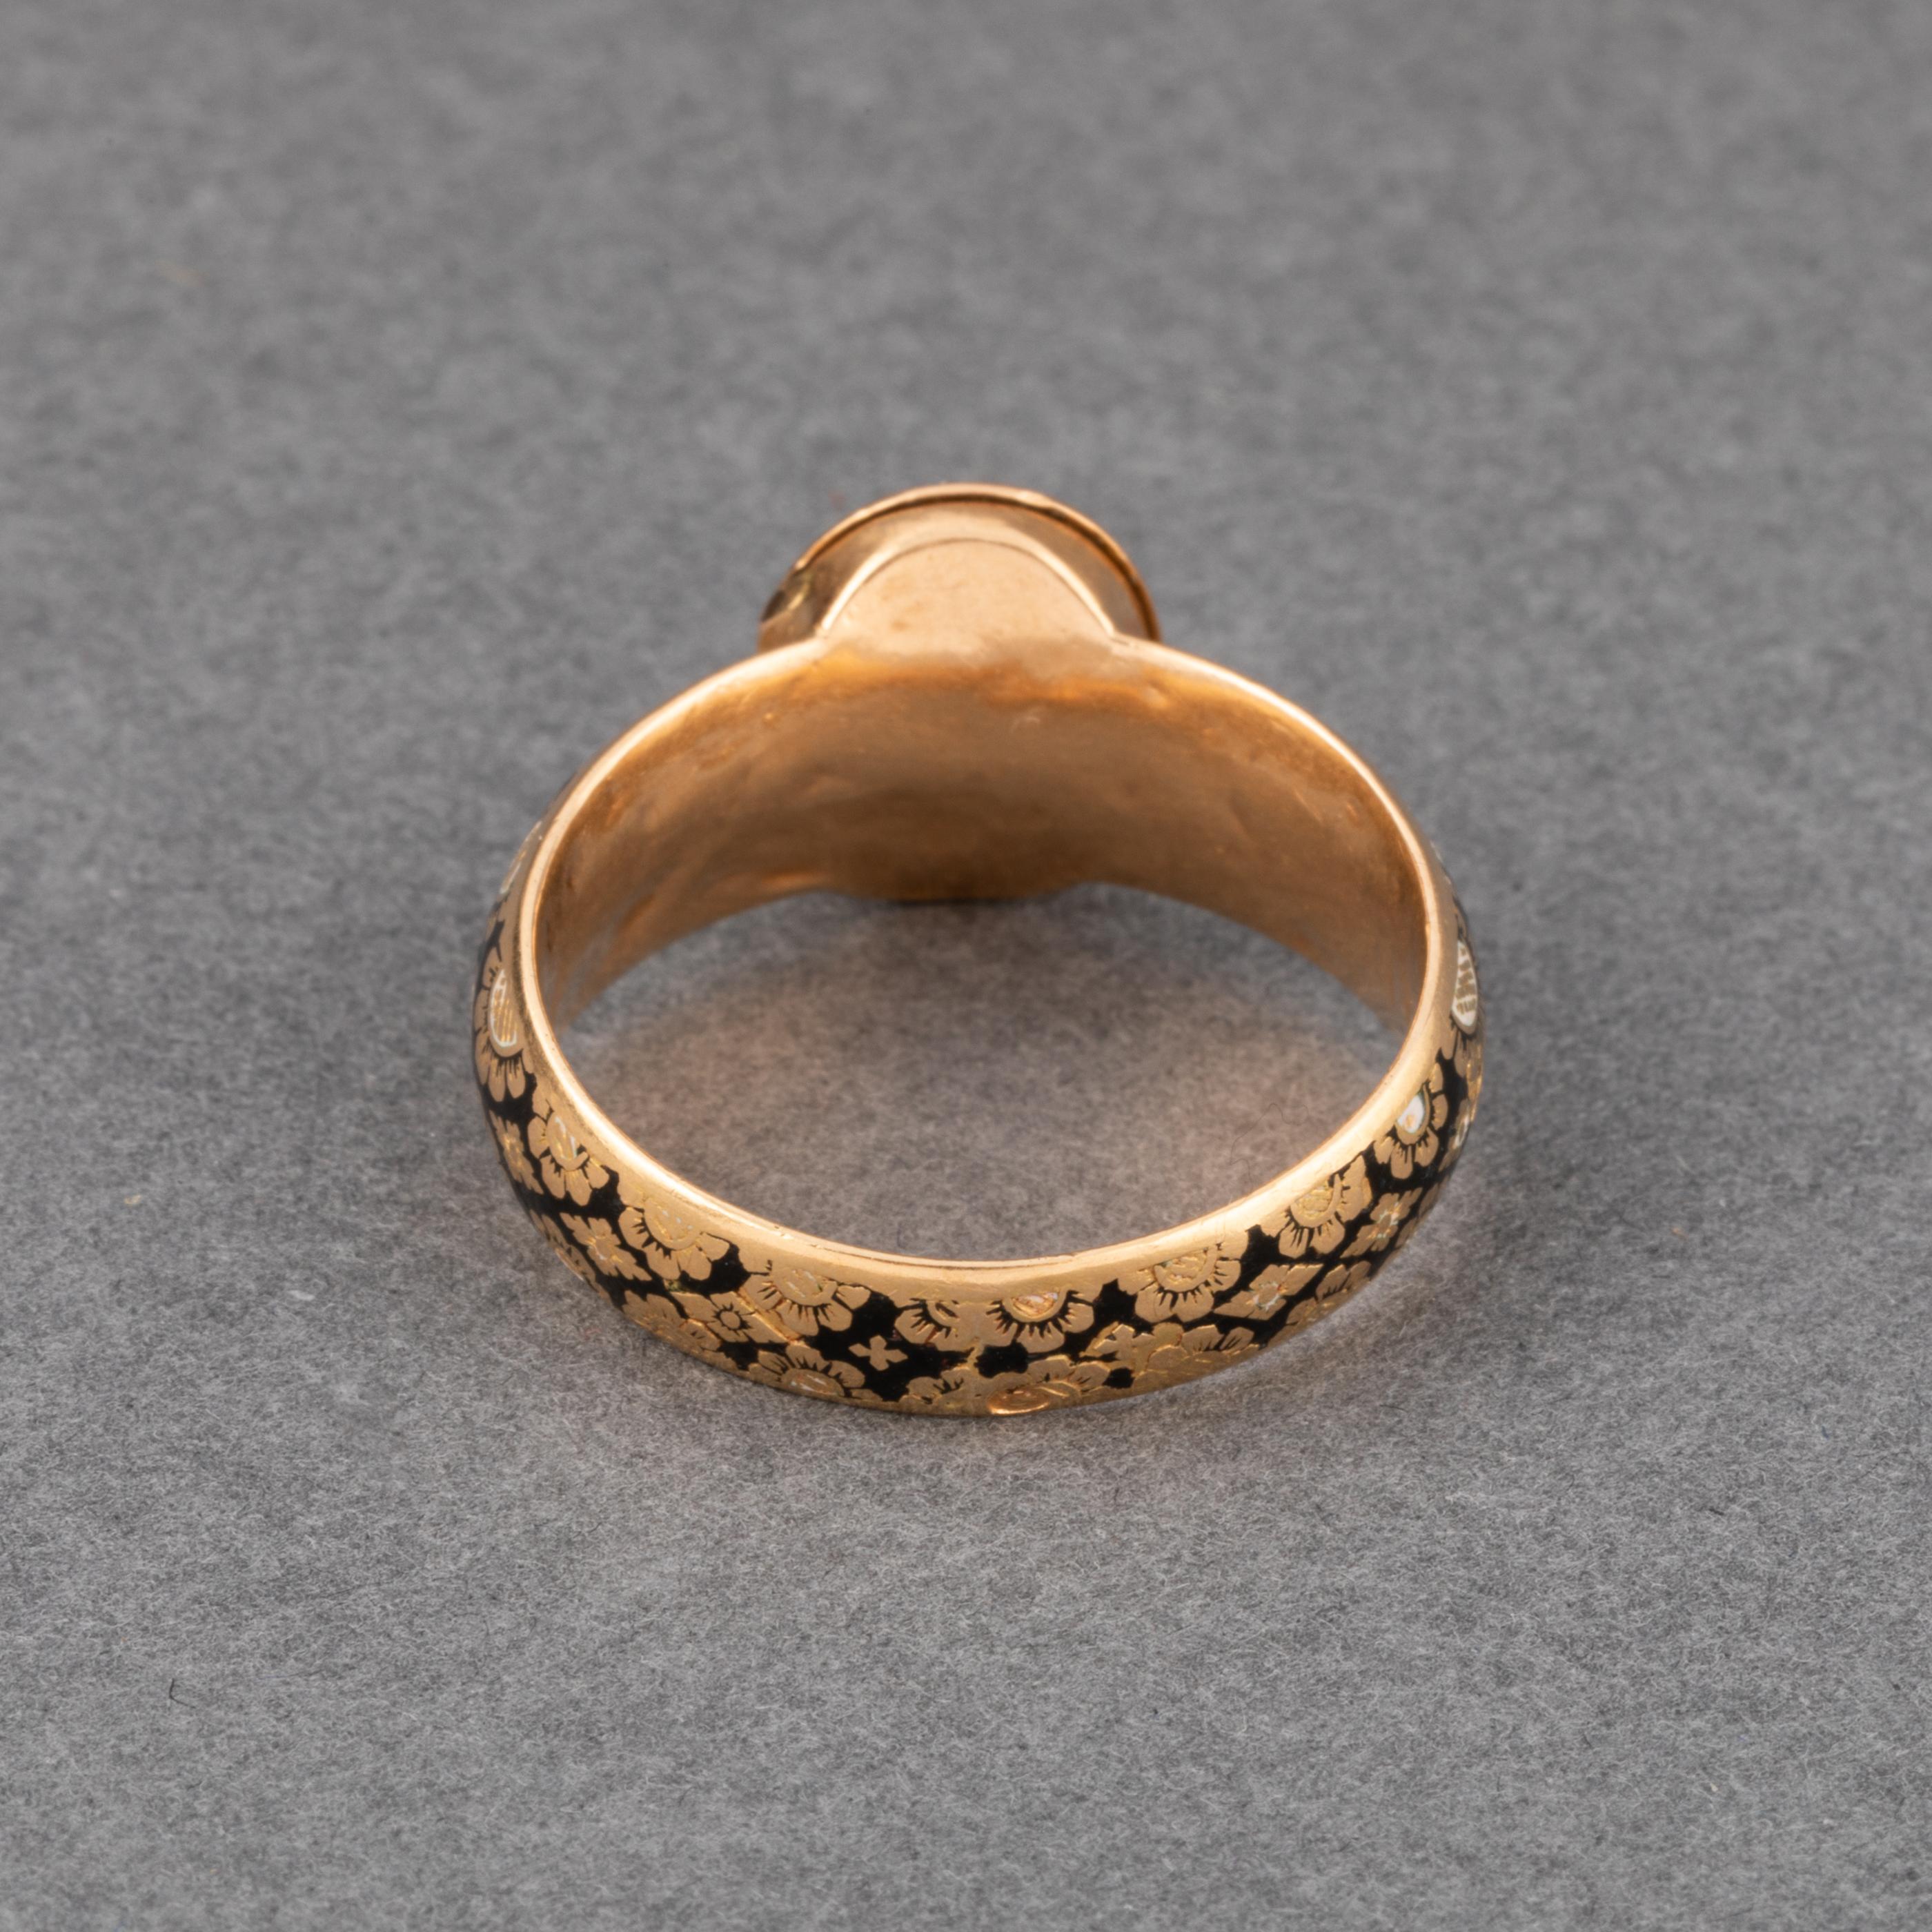 Women's Antique Gold and Enamel Secret Ring